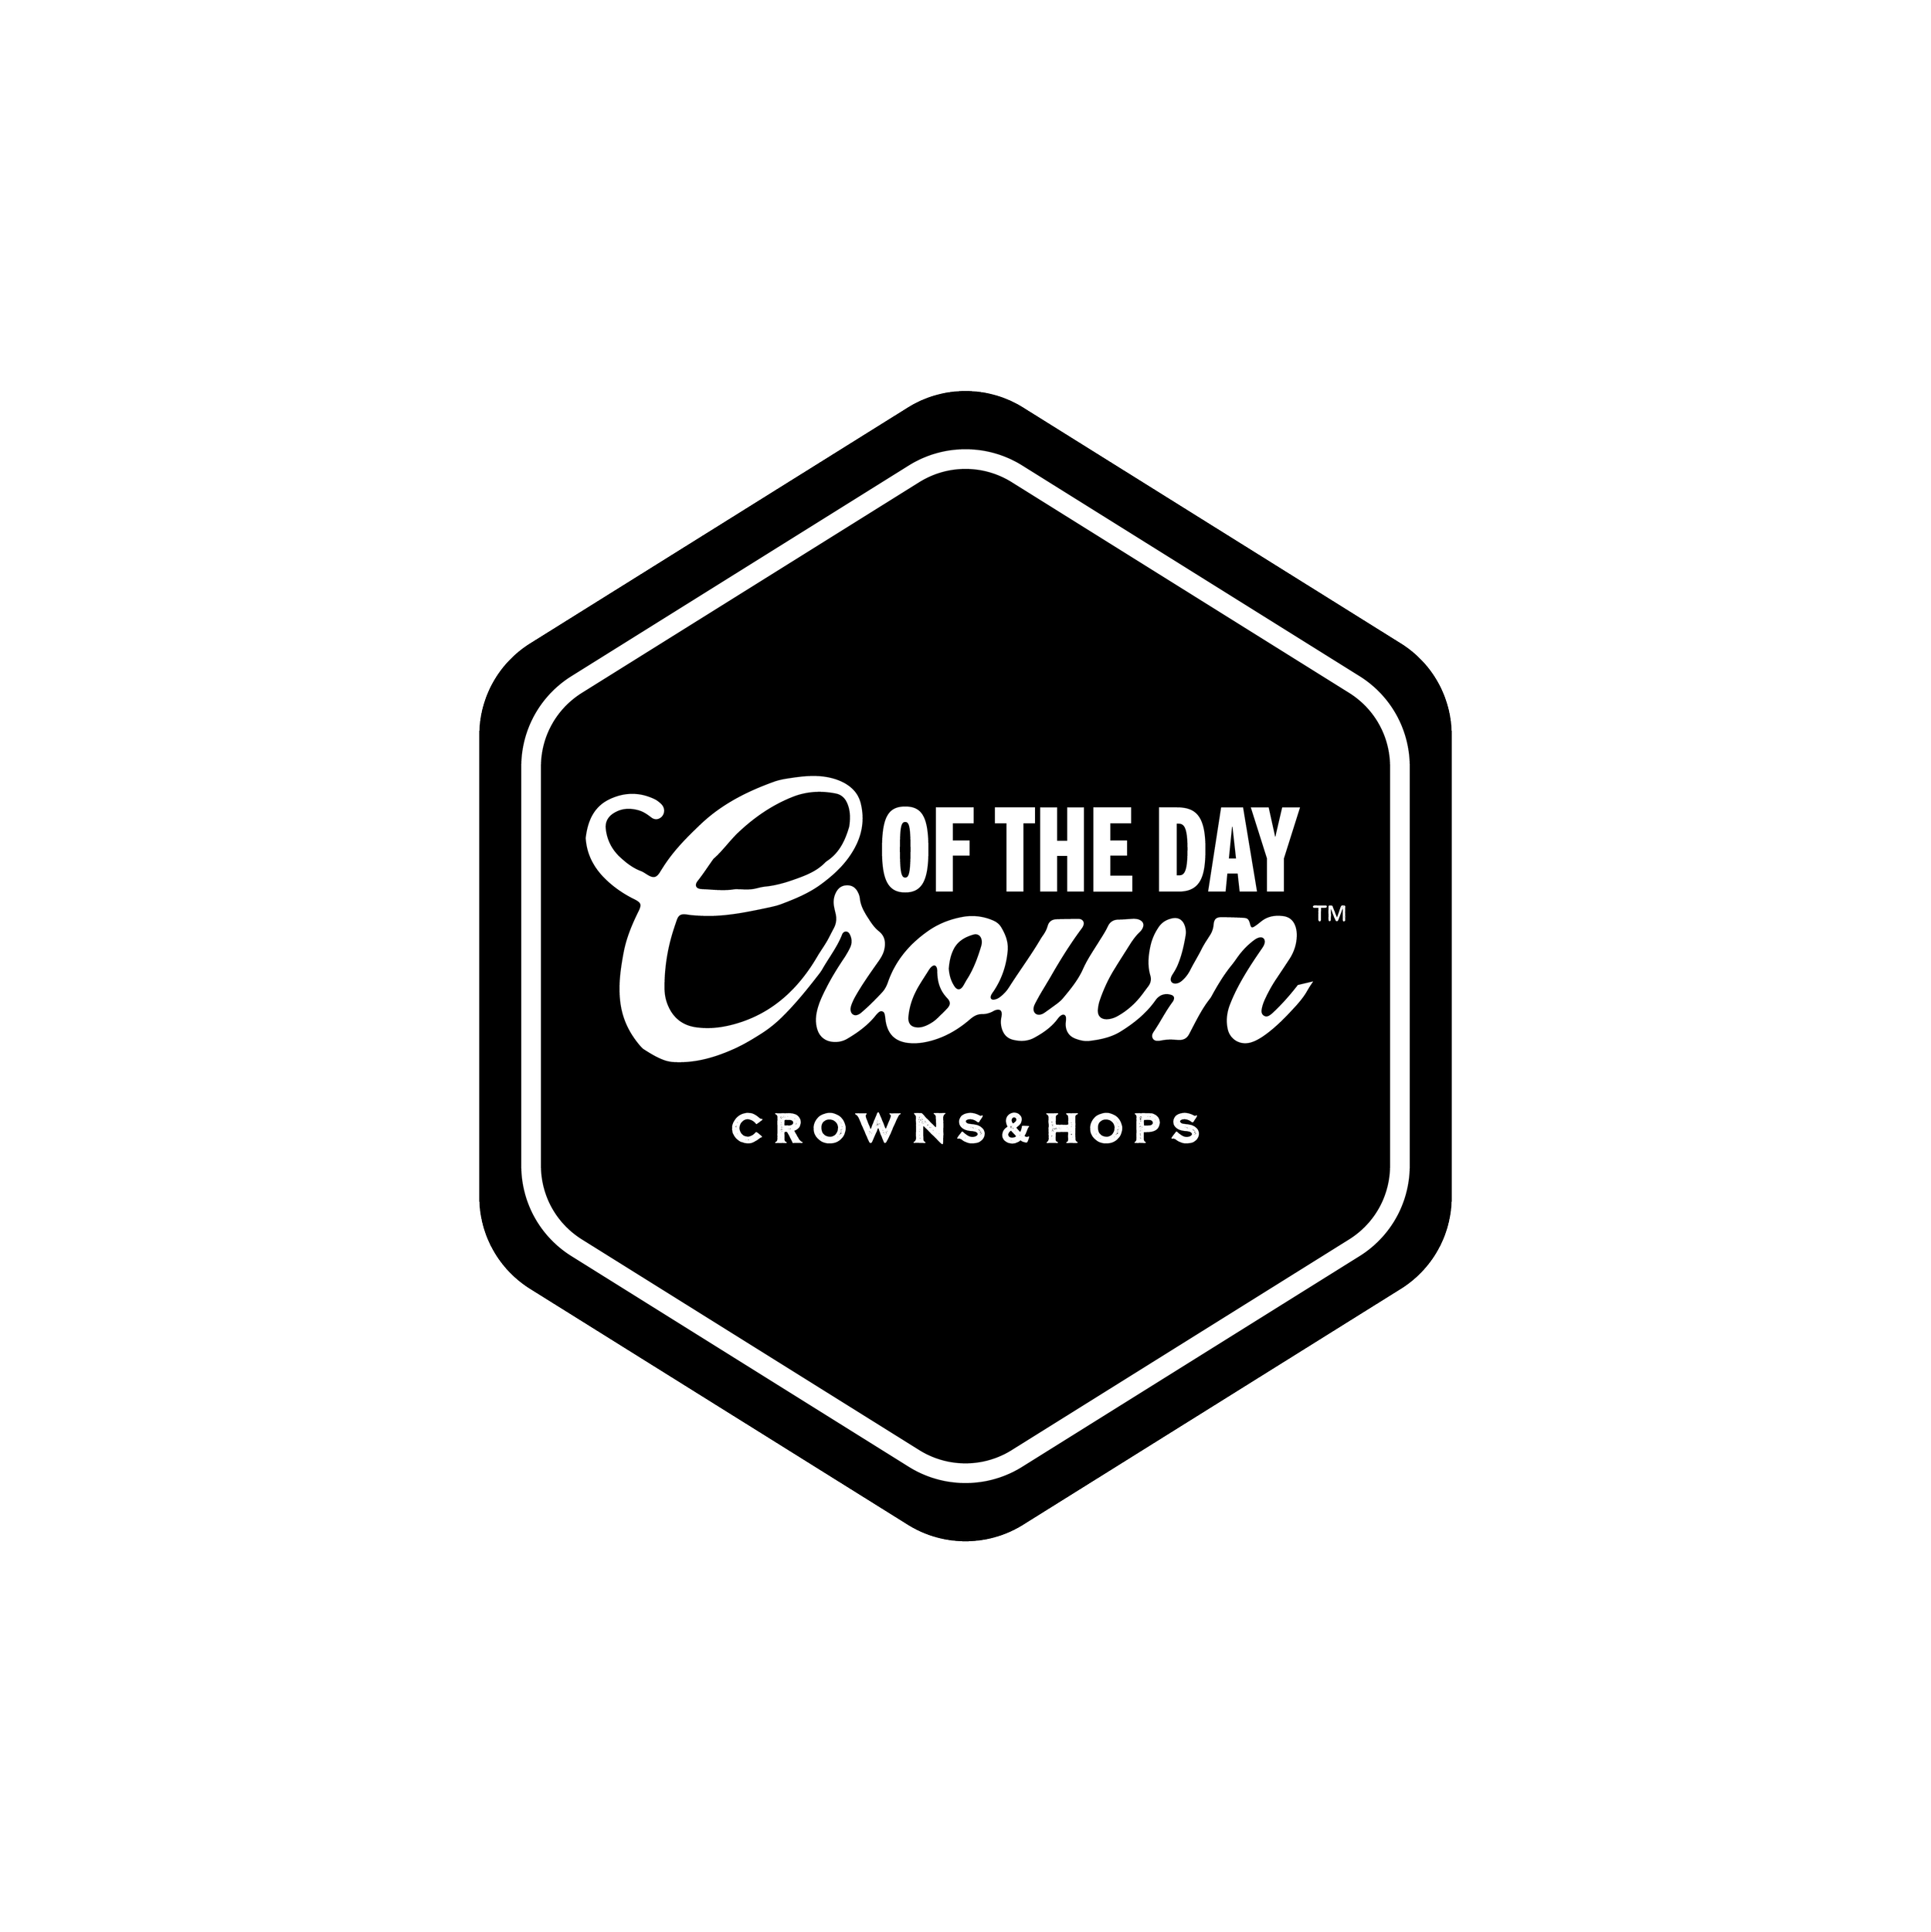 Crowns&Hops_Brand-logos-2_Artboard 5 copy 2.png